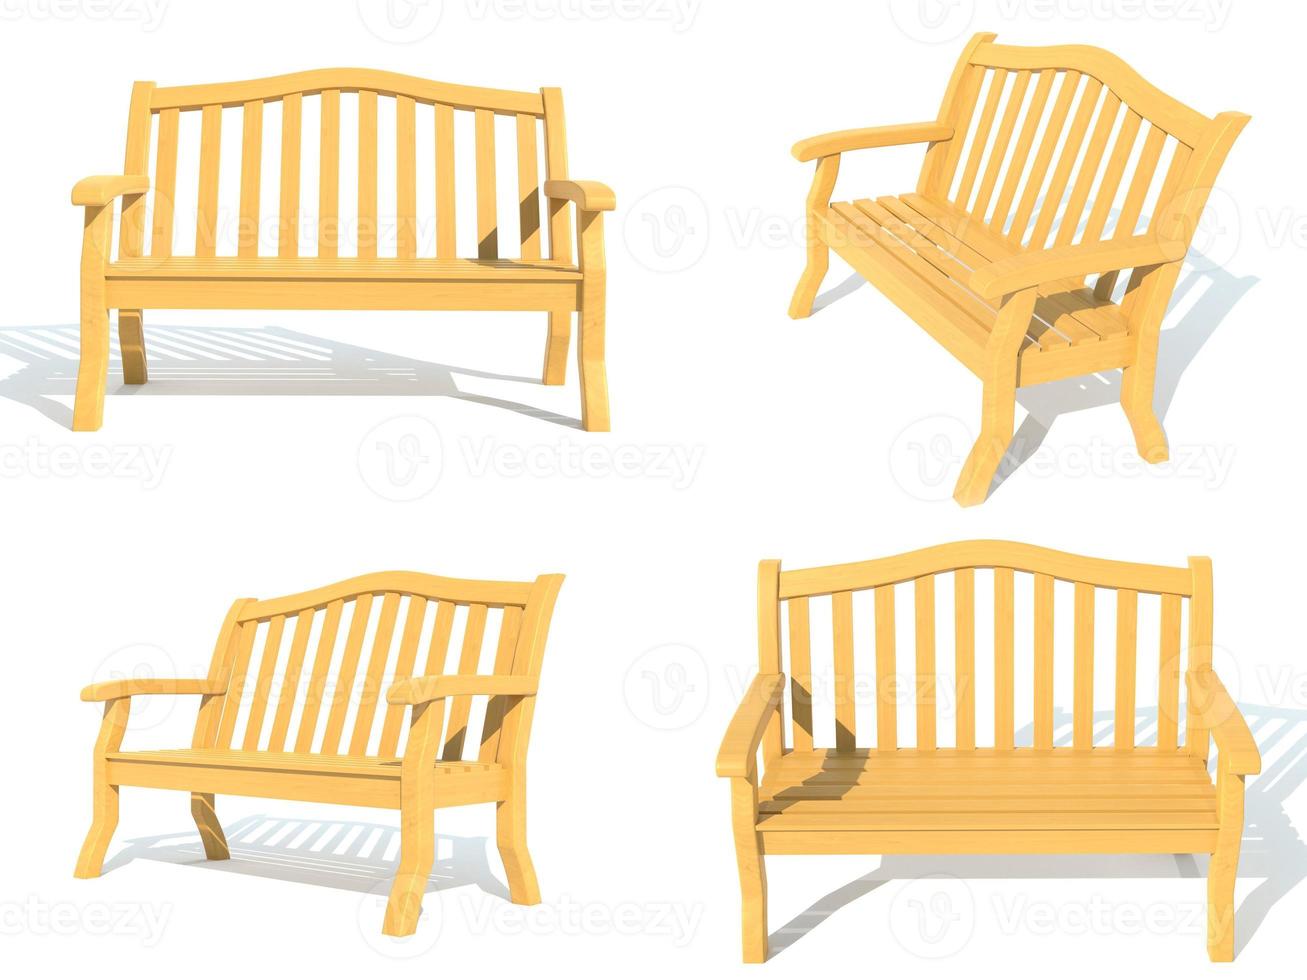 wooden garden park bench 3d render illustration photo